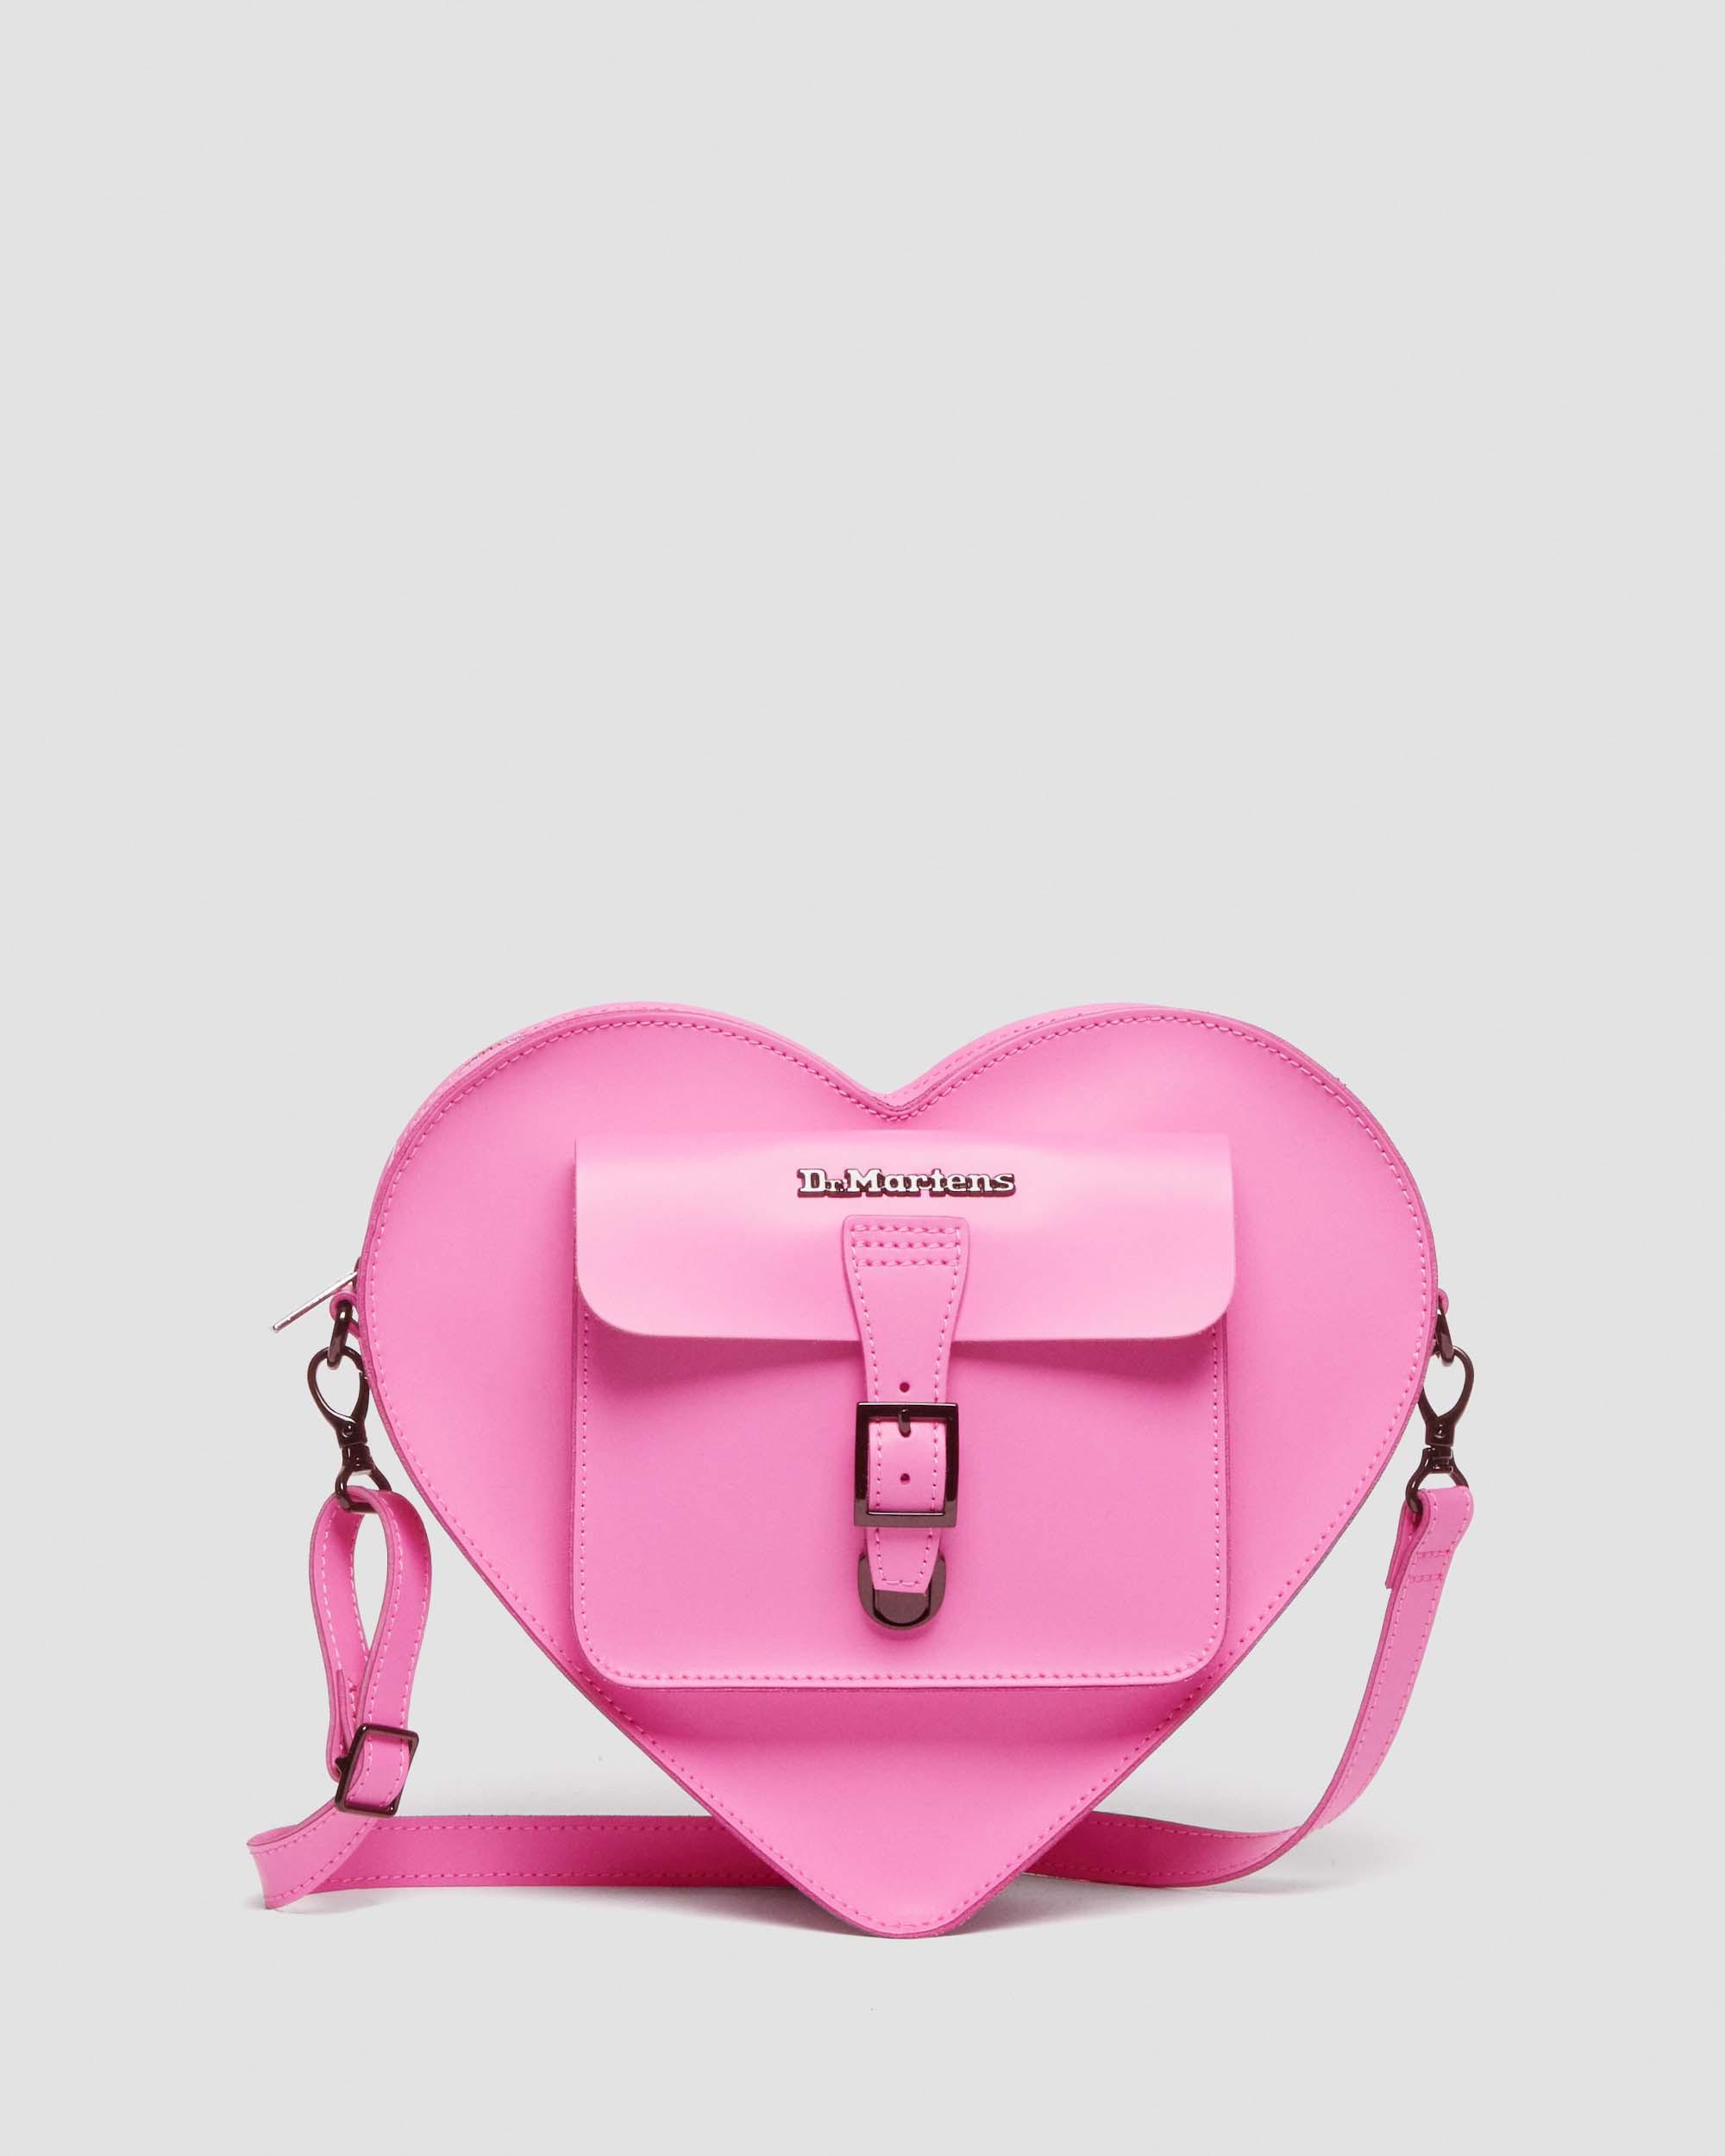 Pink heart shaped bag